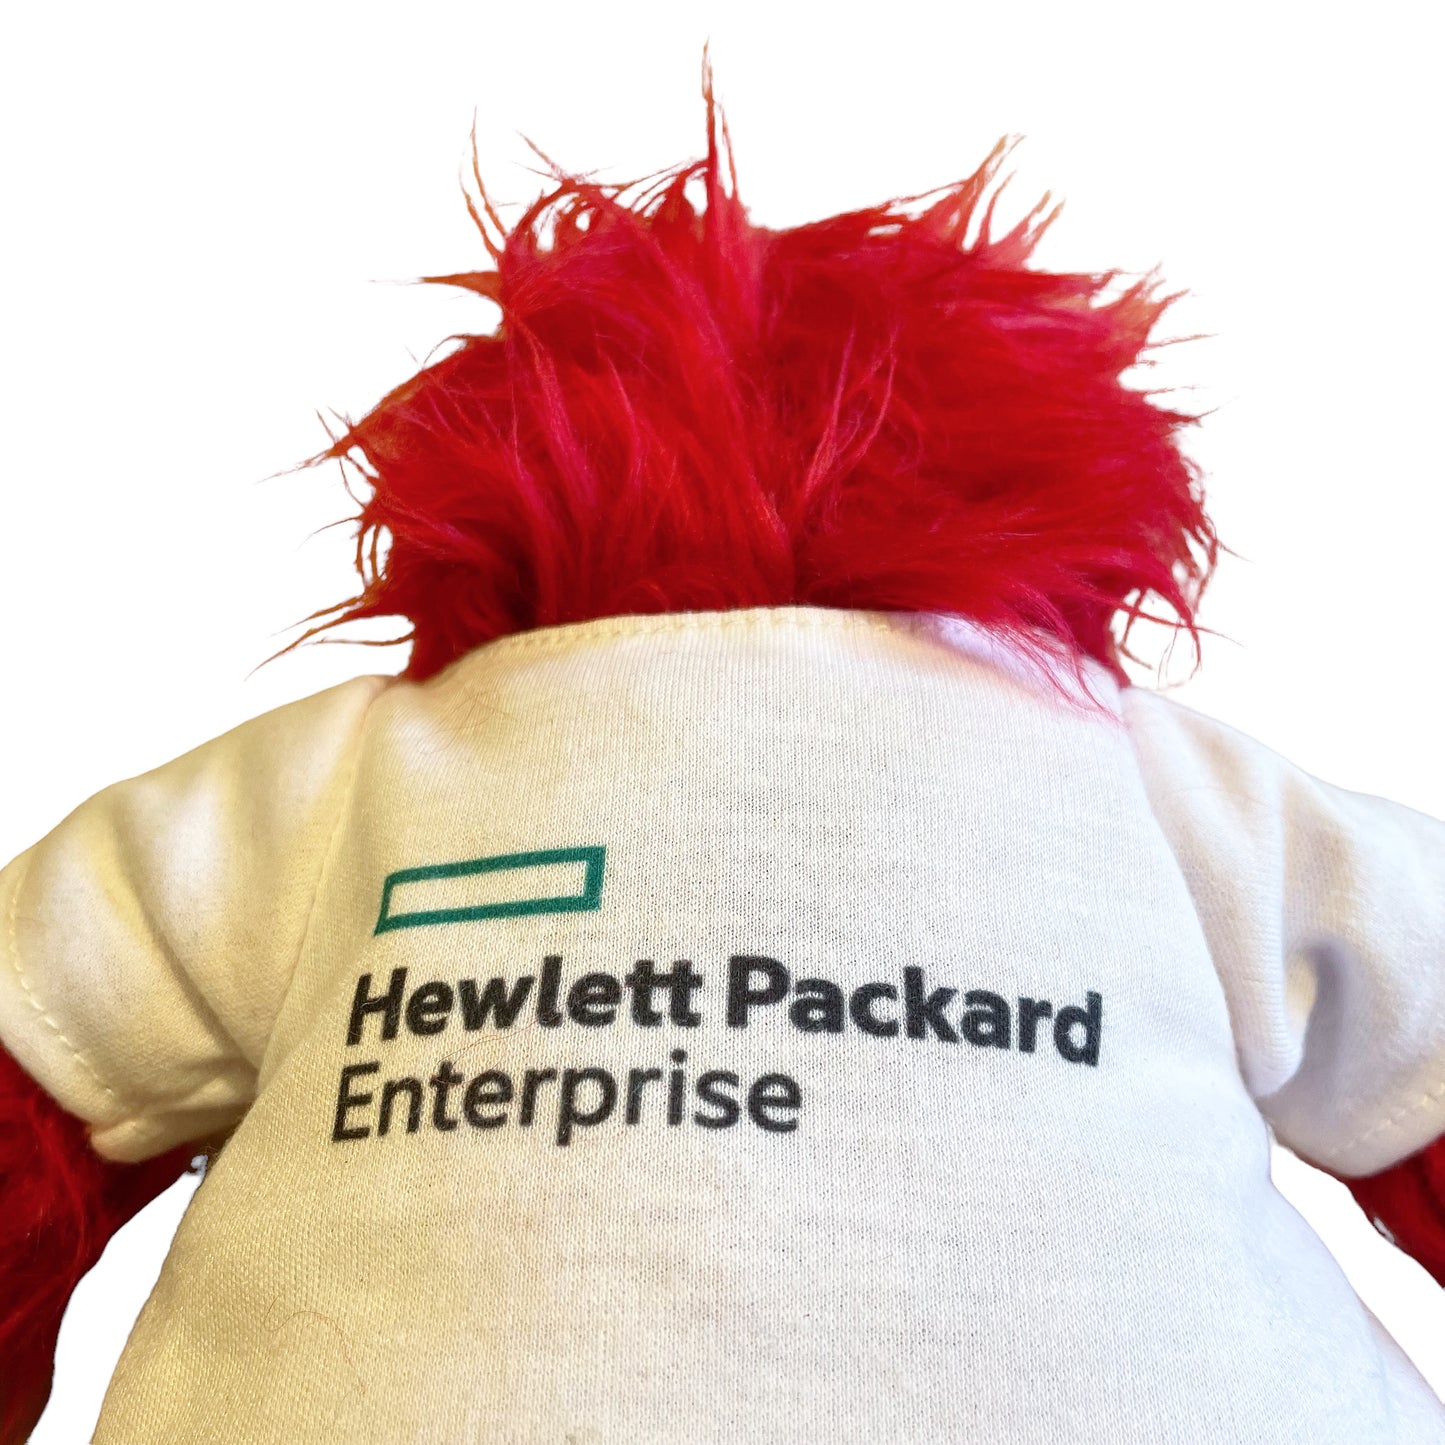 HPE Hewlett Packard Enterprise MONSTER モンスター プラッシュ plush ぬいぐるみ ヒューレットパッカード ヴィンテージ